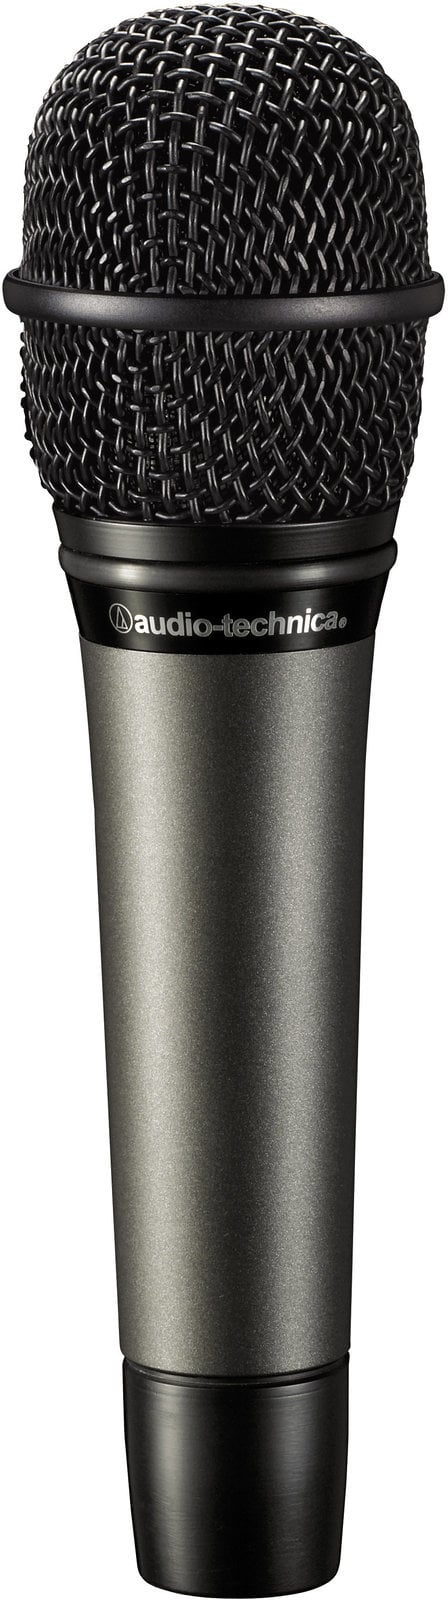 Dynamisches Gesangmikrofon Audio-Technica ATM610a Dynamisches Gesangmikrofon